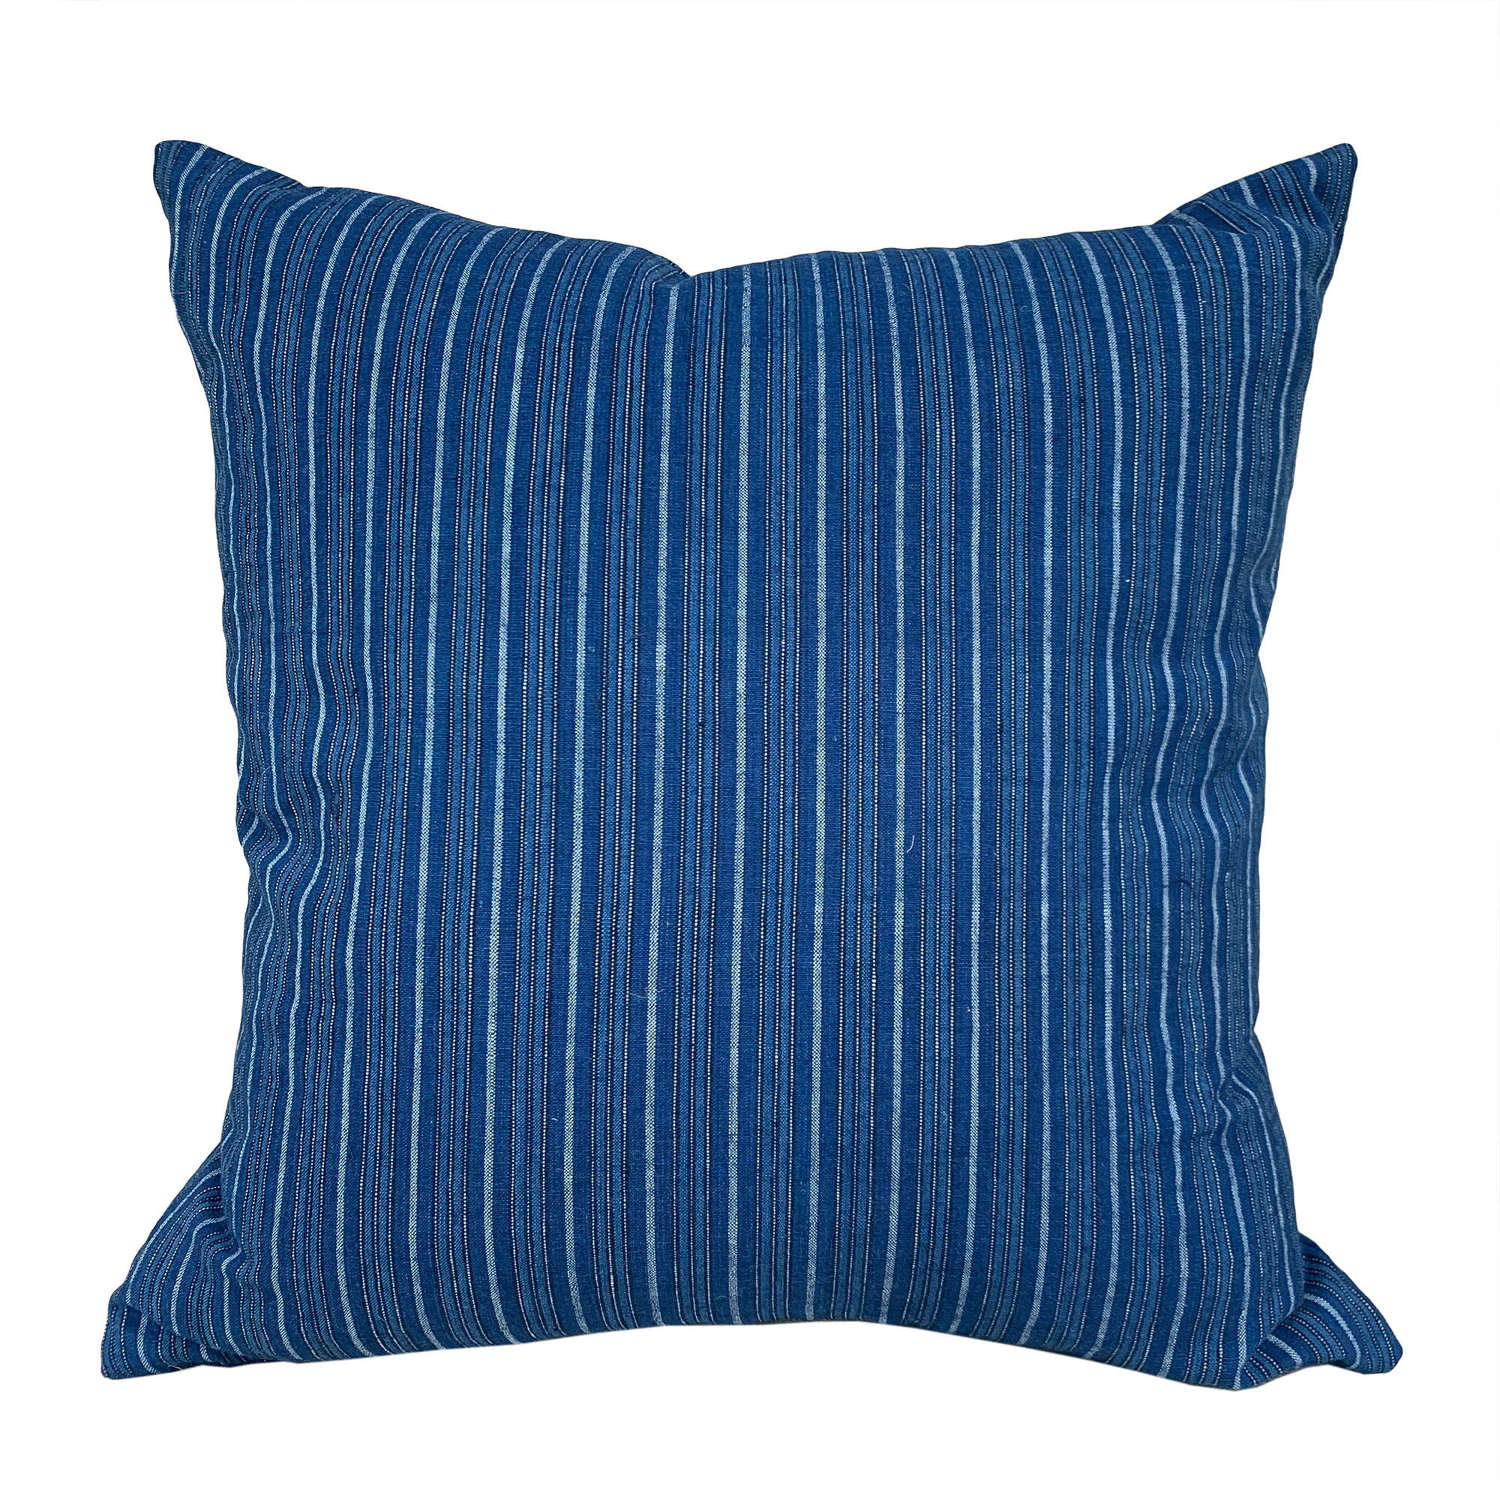 Songjiang Striped Cushions, Mid Blue